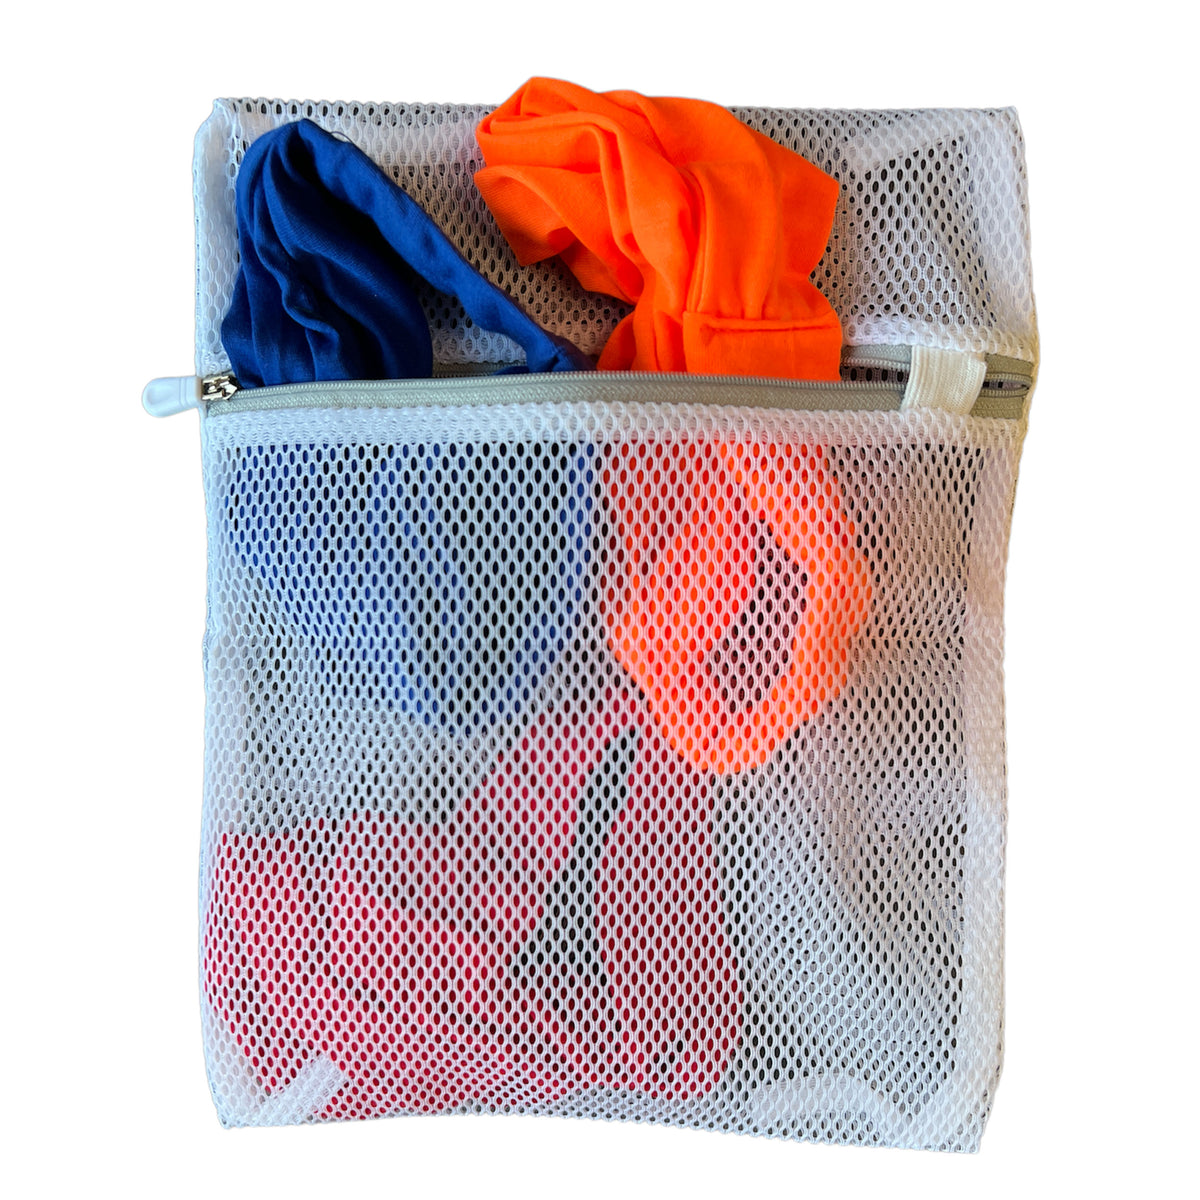 100% New,Bra Washing Bag Washer Protector Bra Washing Bags for